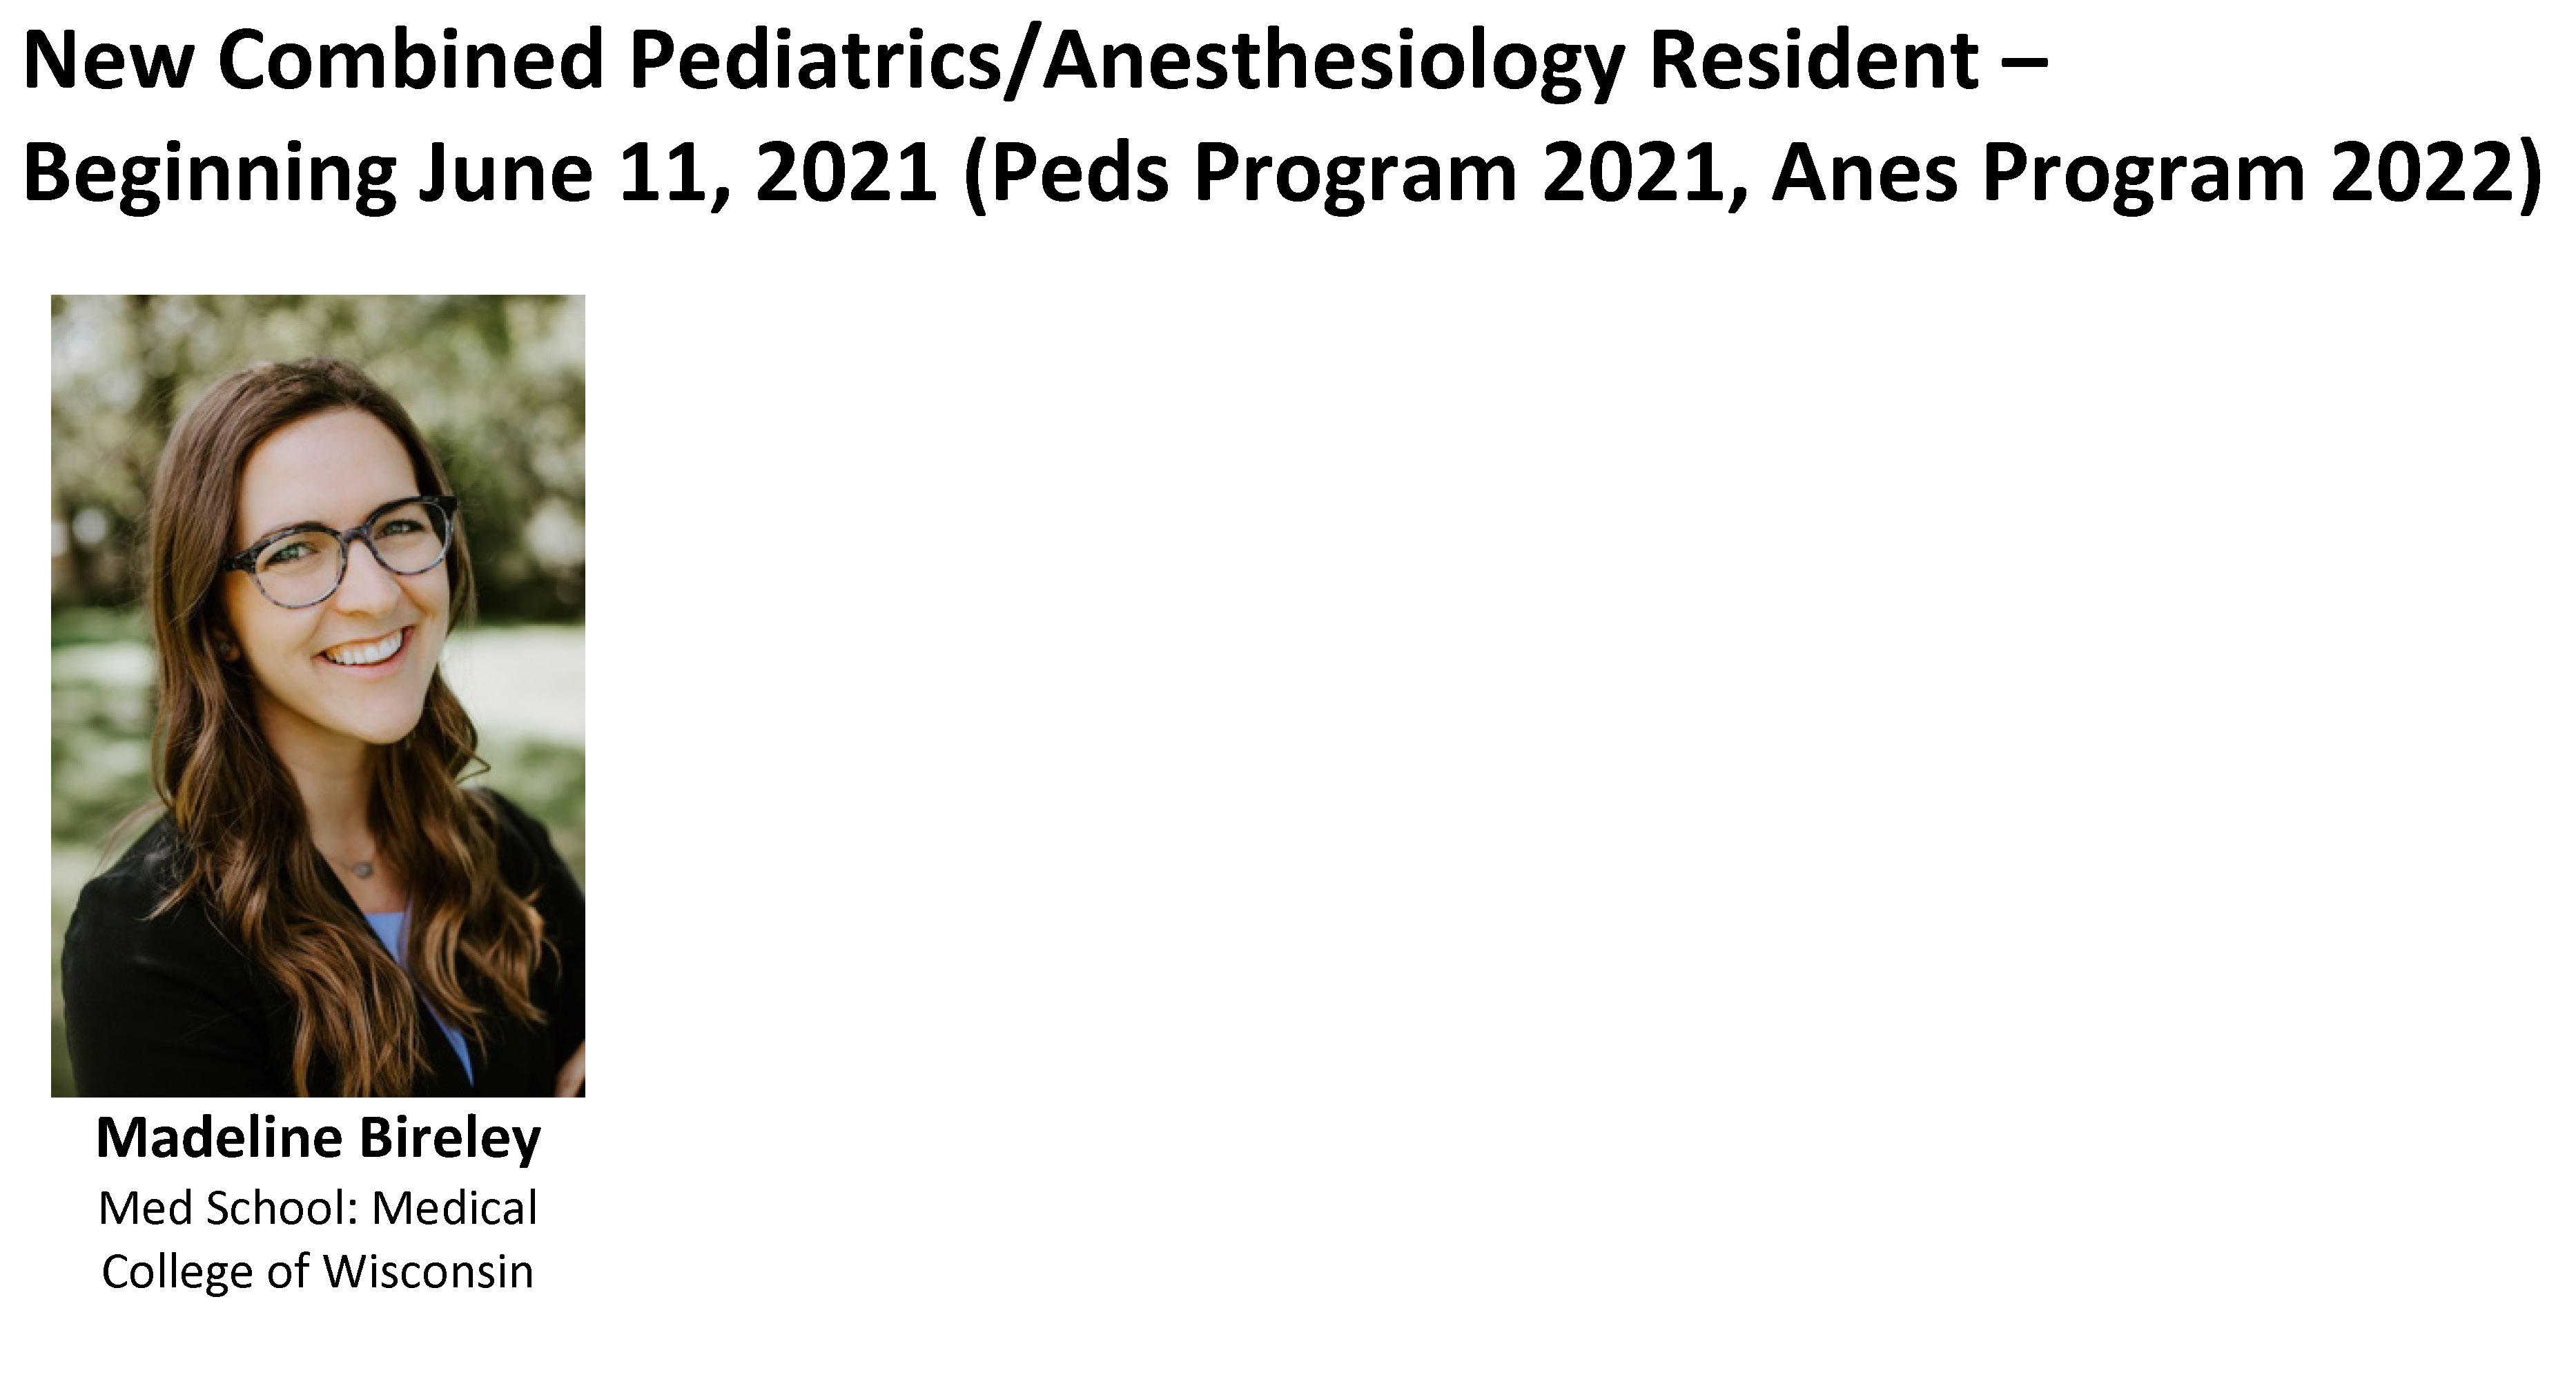 "Headshot of the Pediatrics Anesthesiology Resident"